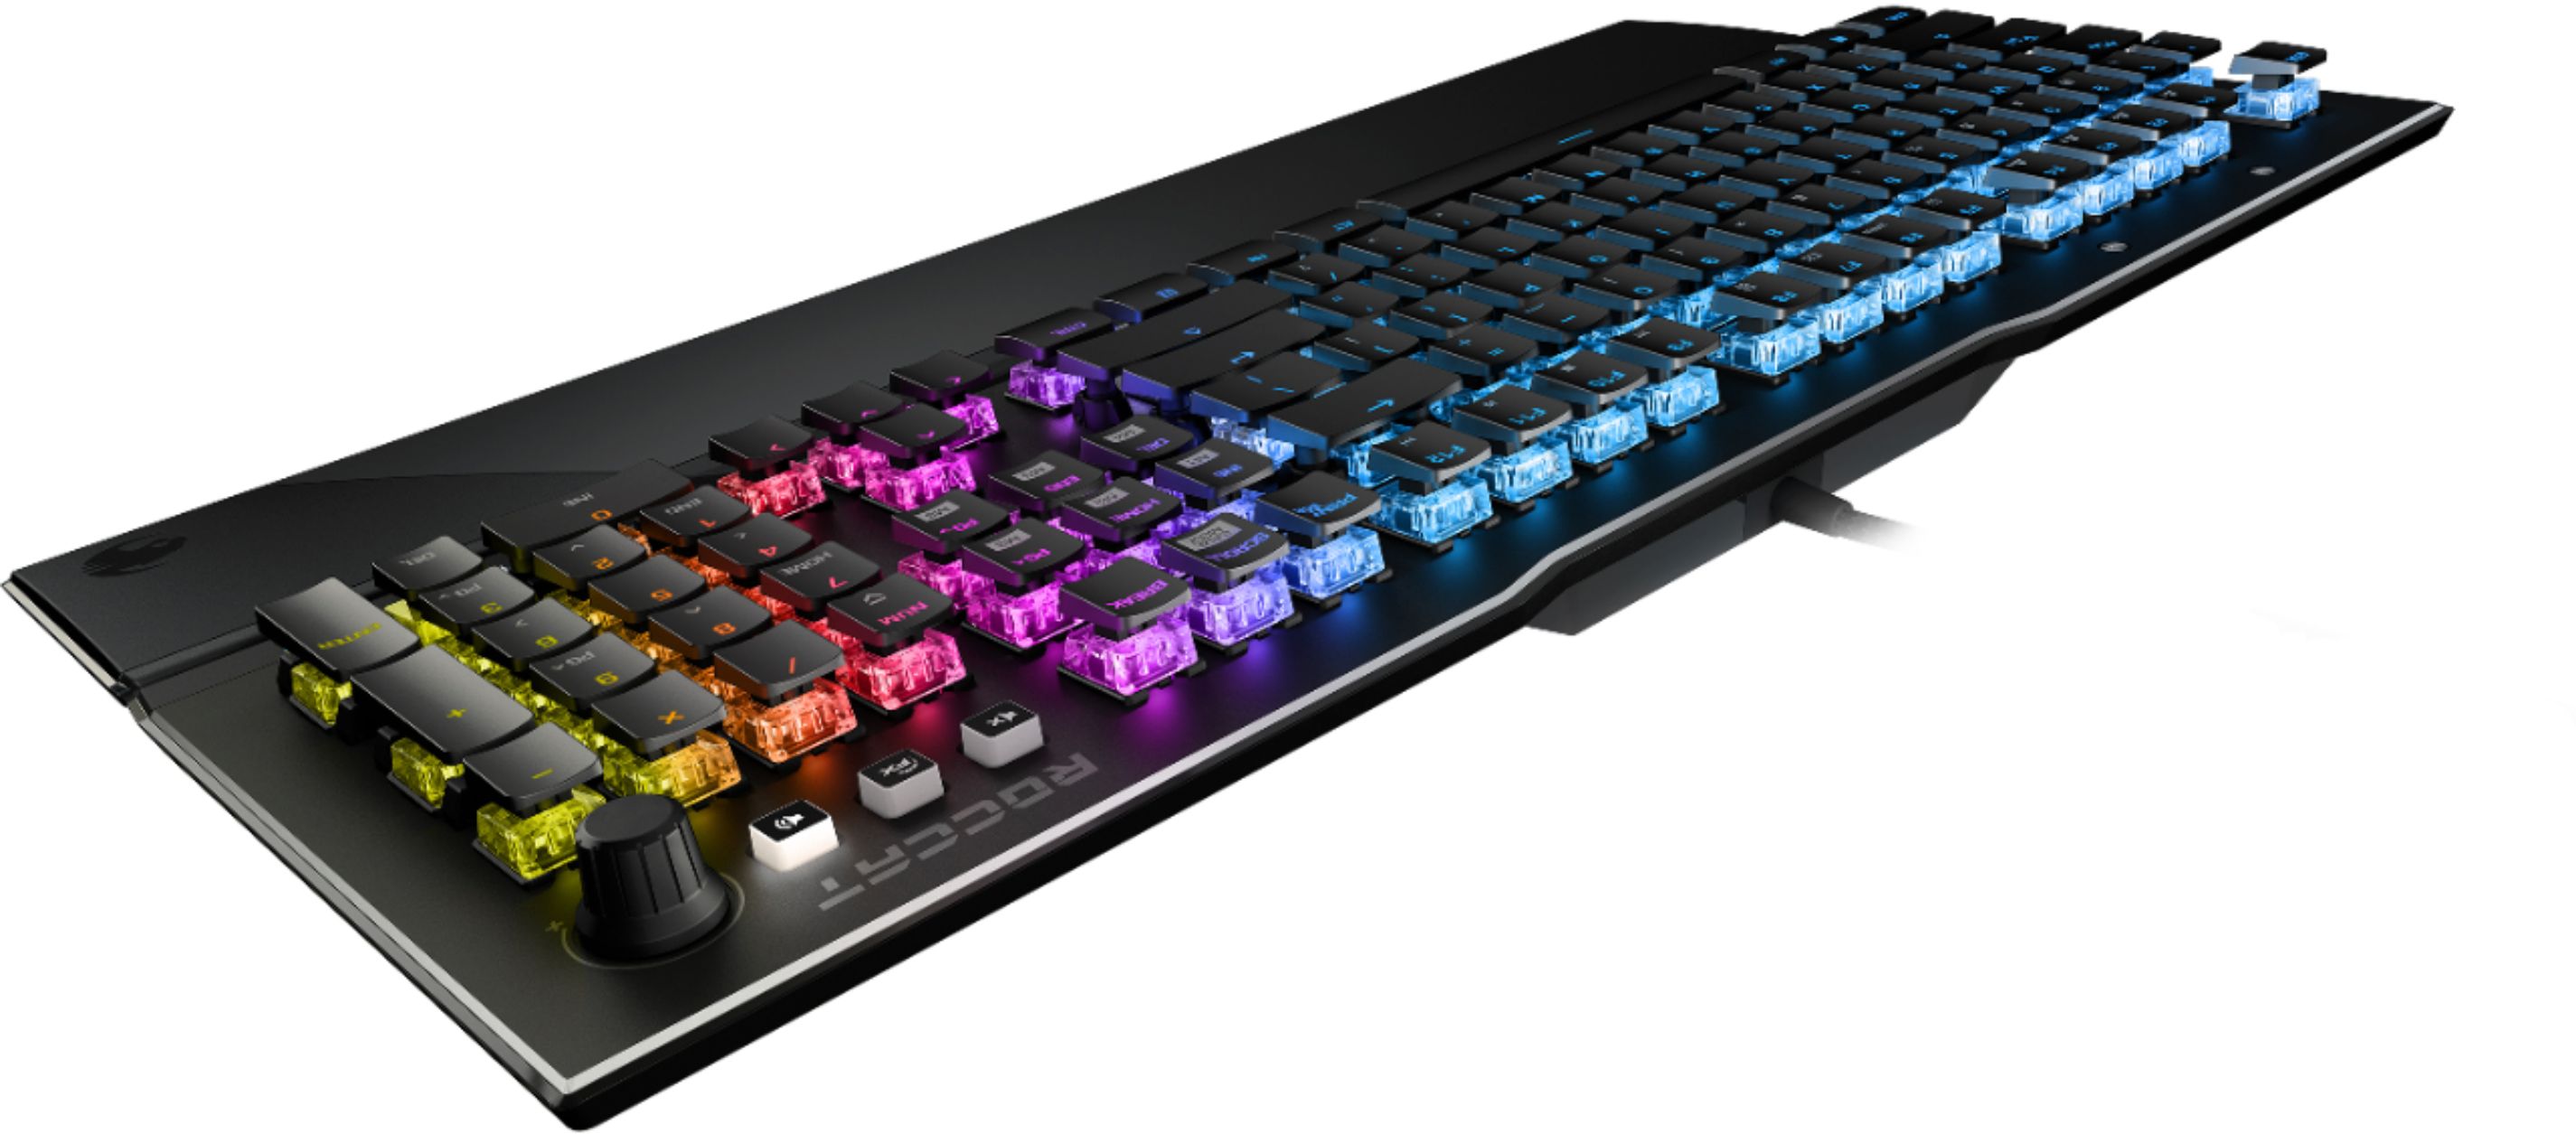 Roccat Vulcan mechanical gaming keyboard, AIMO LED per-key